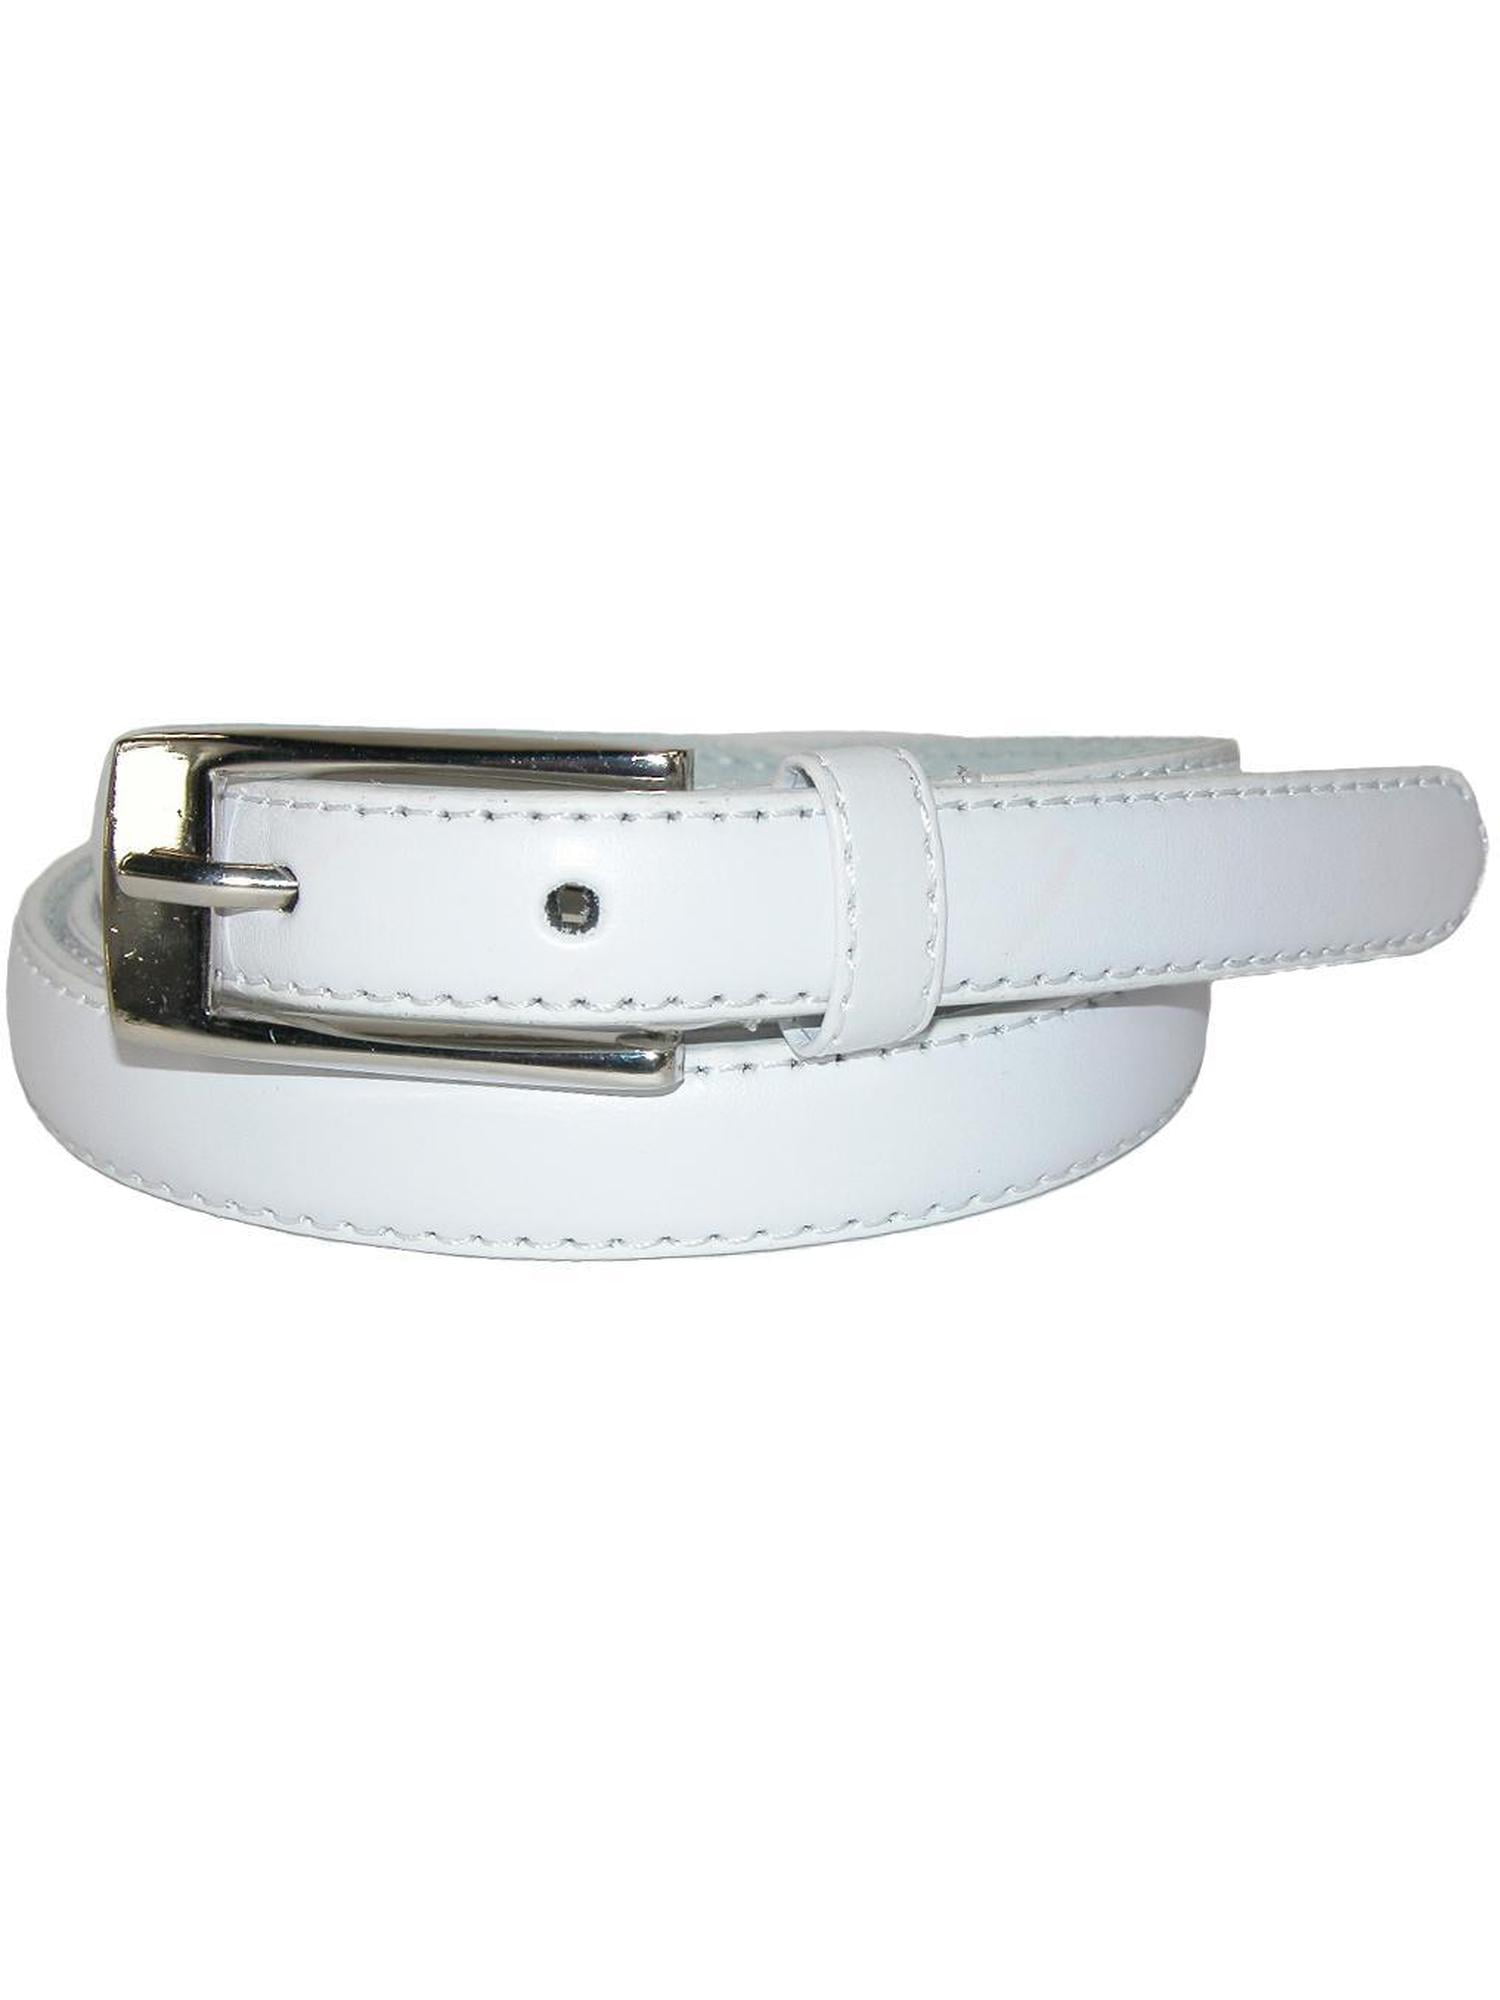 7055 Women's Belt Smooth Leather Casual Dress Skinny Belt 3/4(19mm) Wide